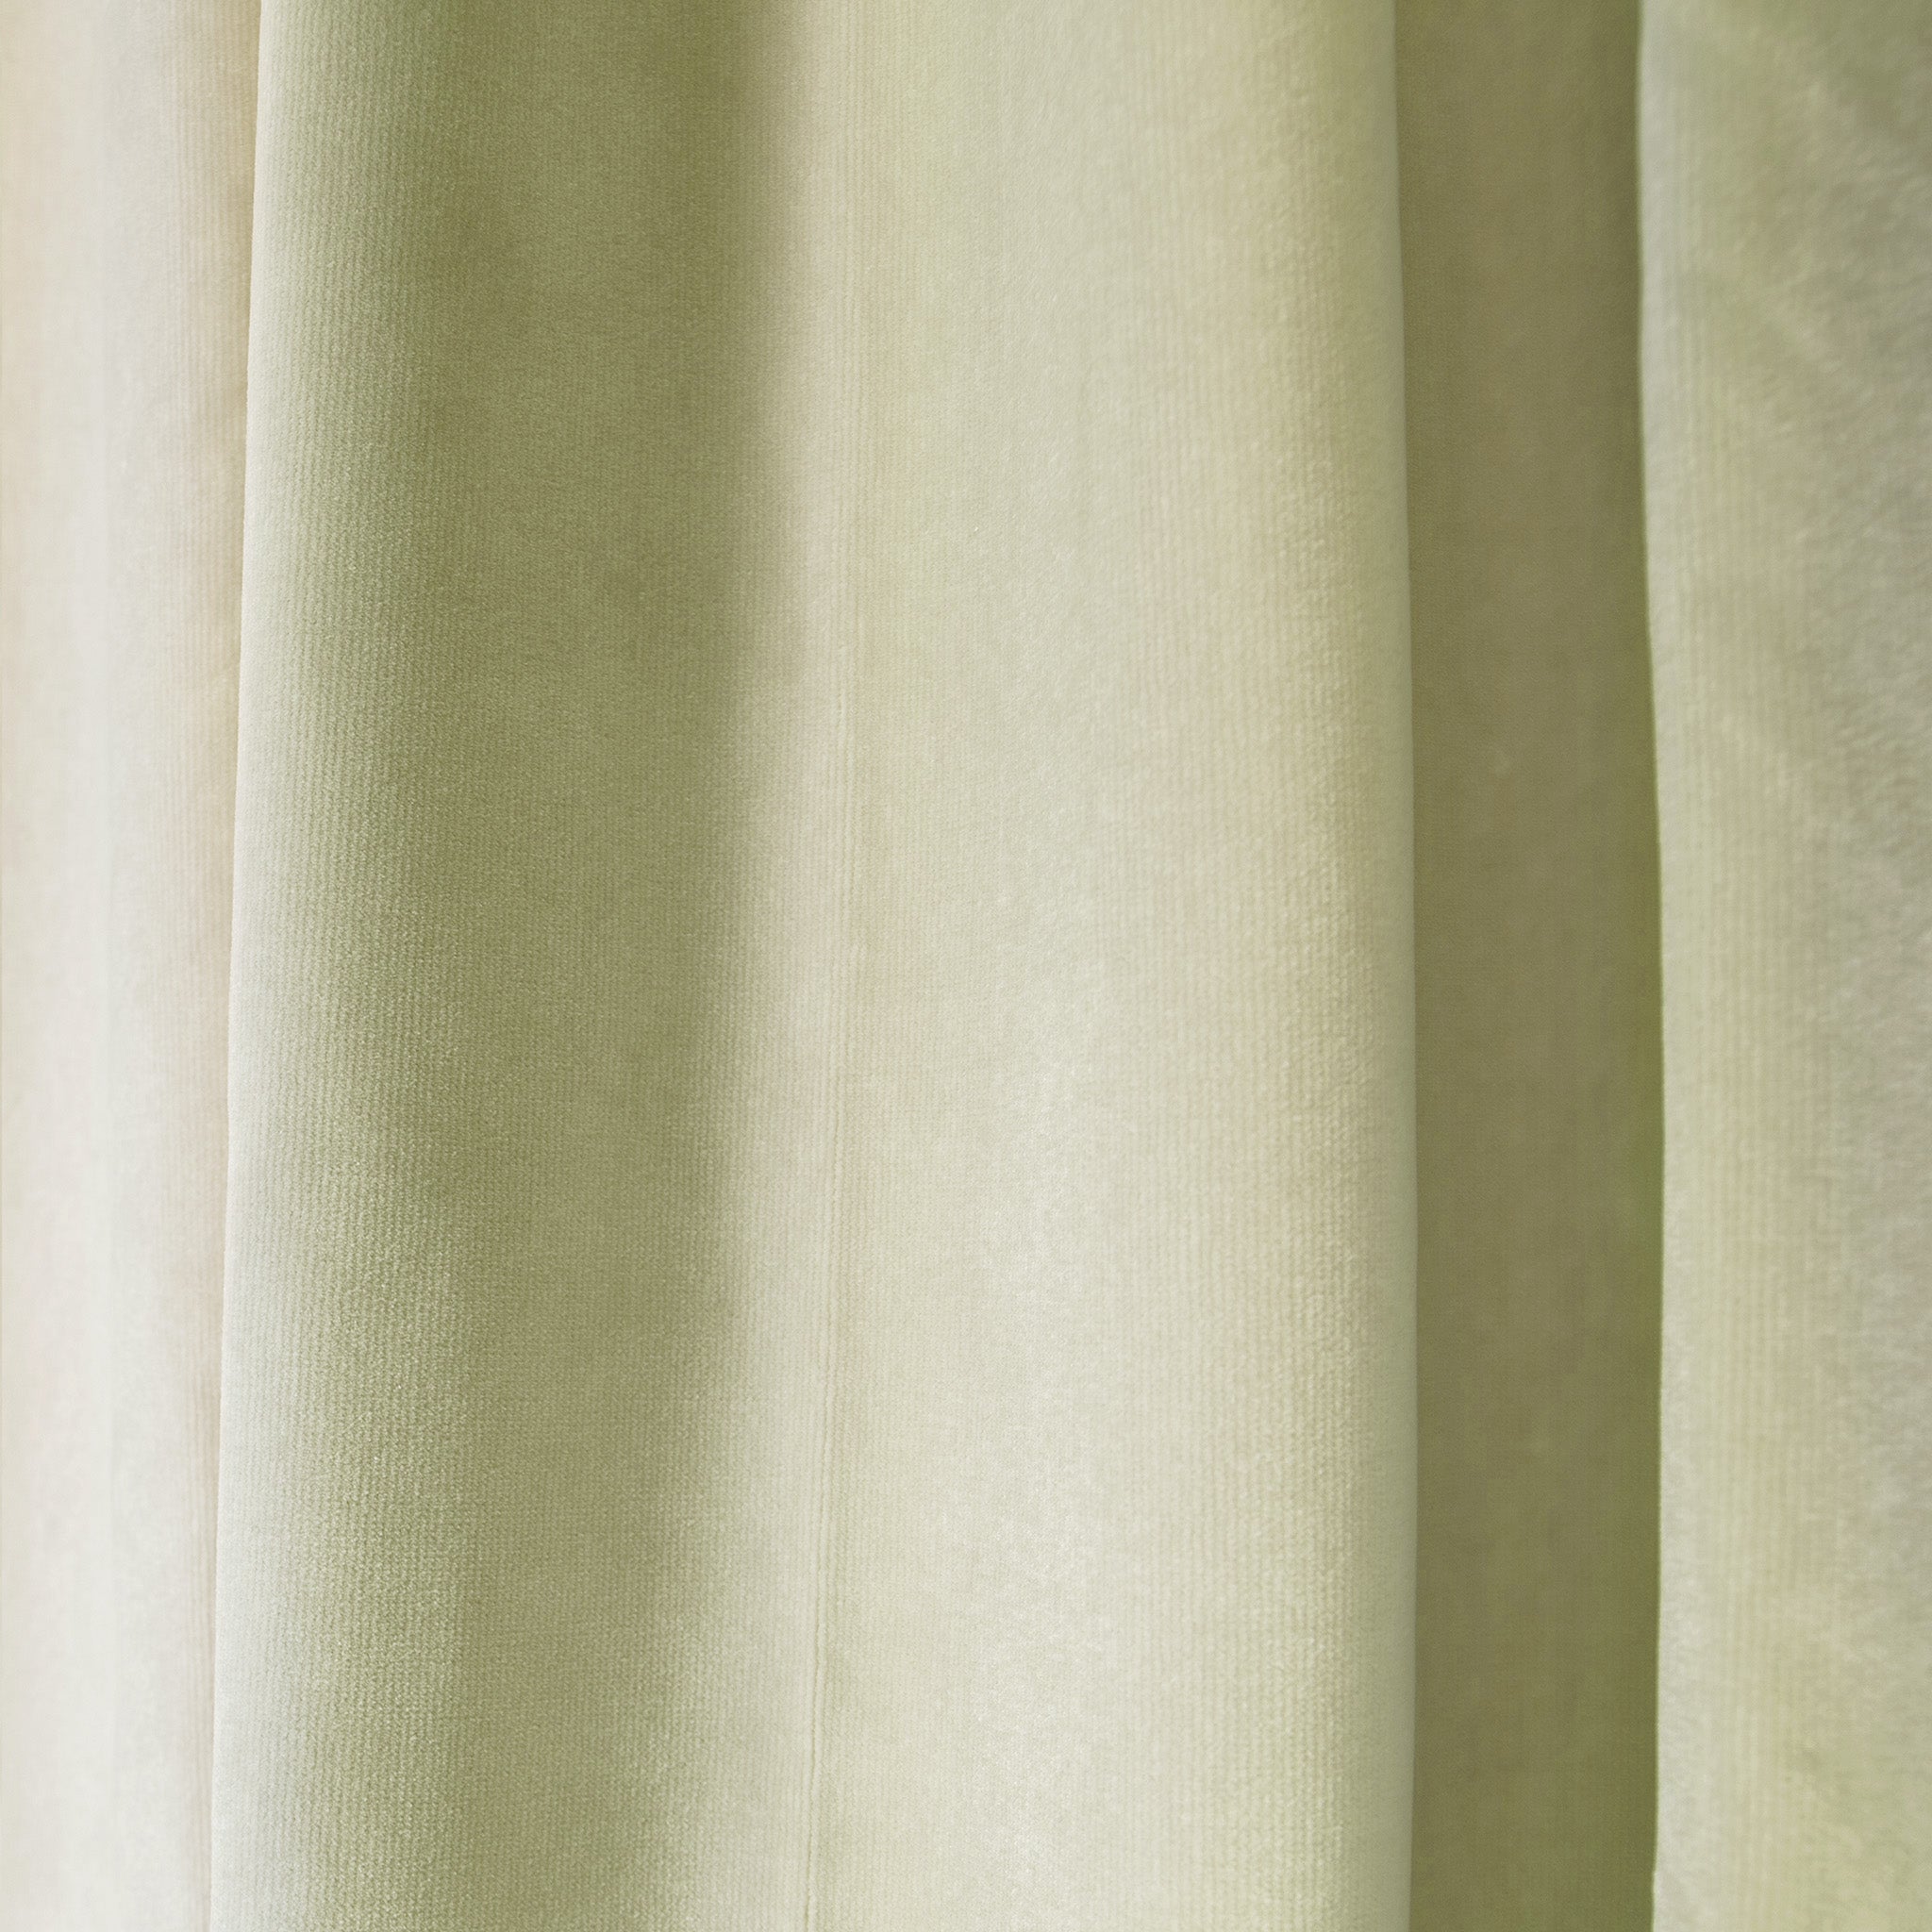 Light Green Velvet Curtain Close-Up